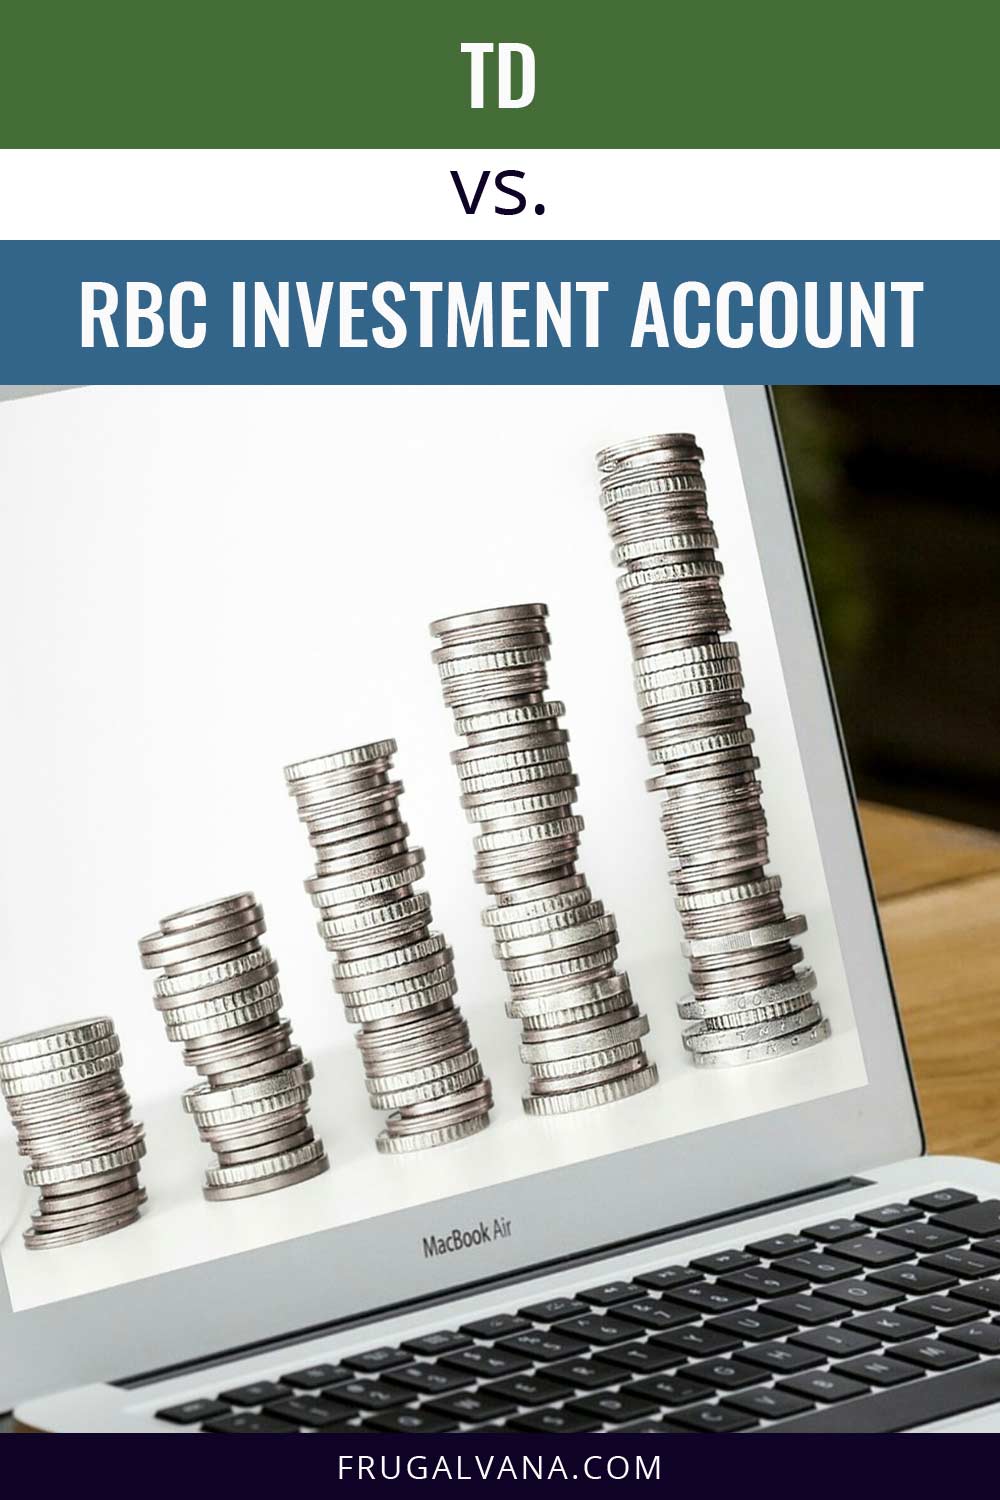 TD vs. RBC Investment Account